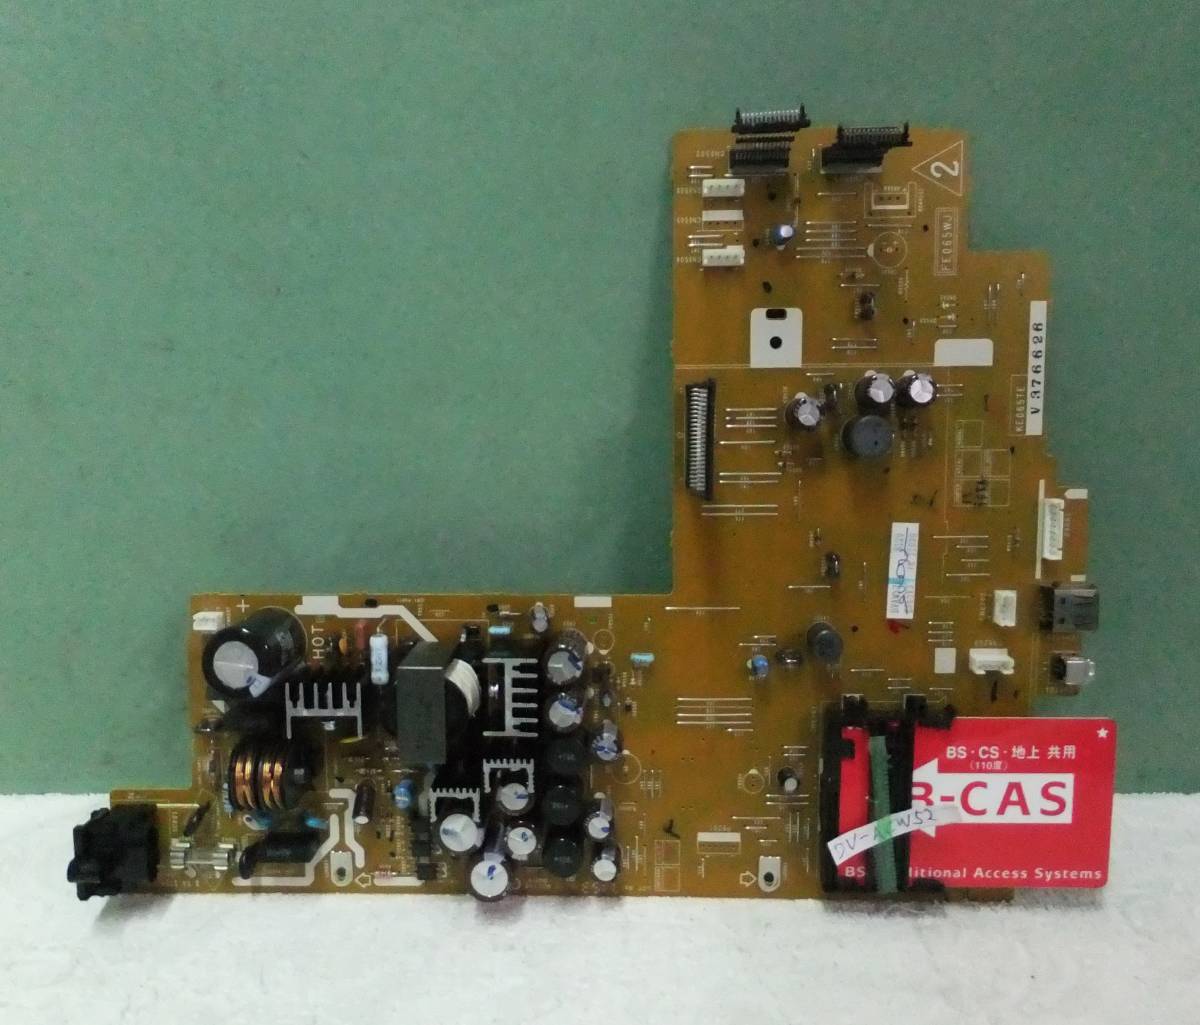  recorder DV-AC82/ACW72/ACW52/ACV52 power supply board B-CAS card 7 pieces set used 